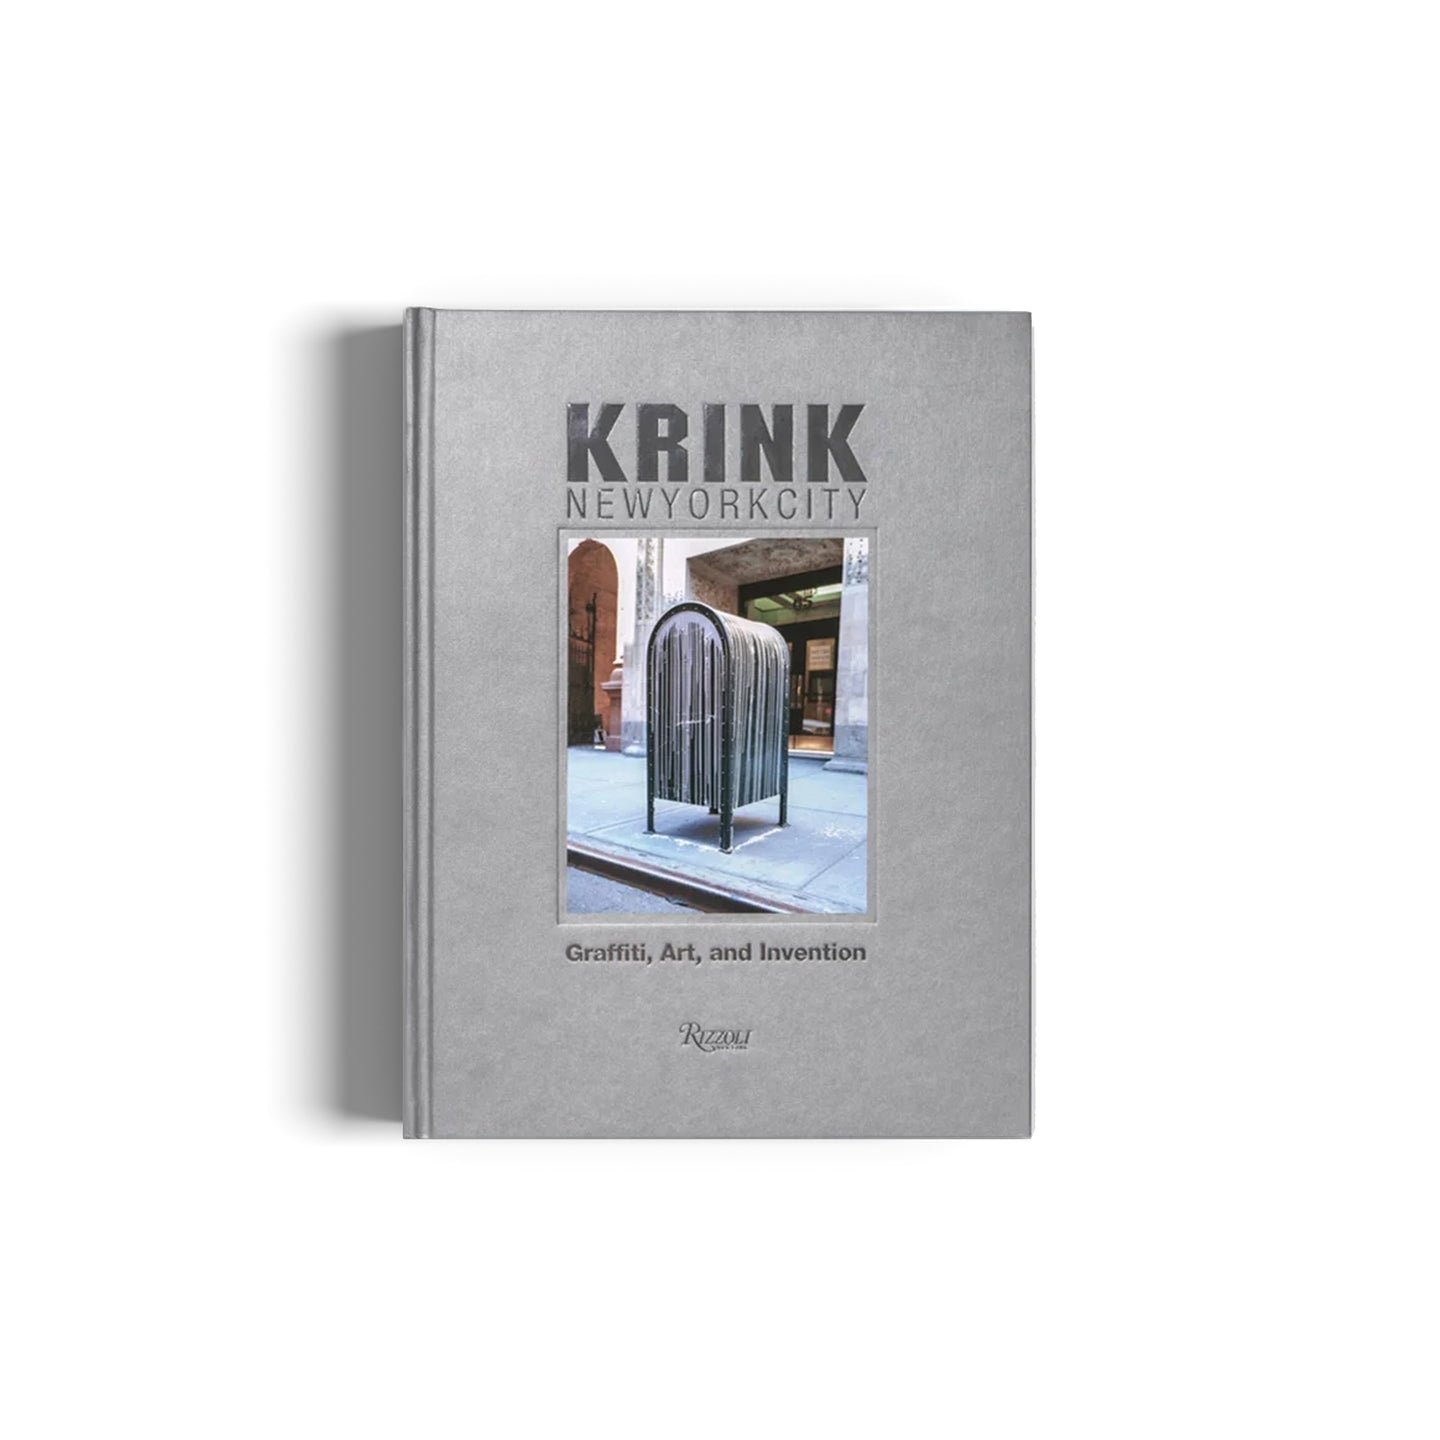 KRINK - New York City / Graffiti, Art, and Invention